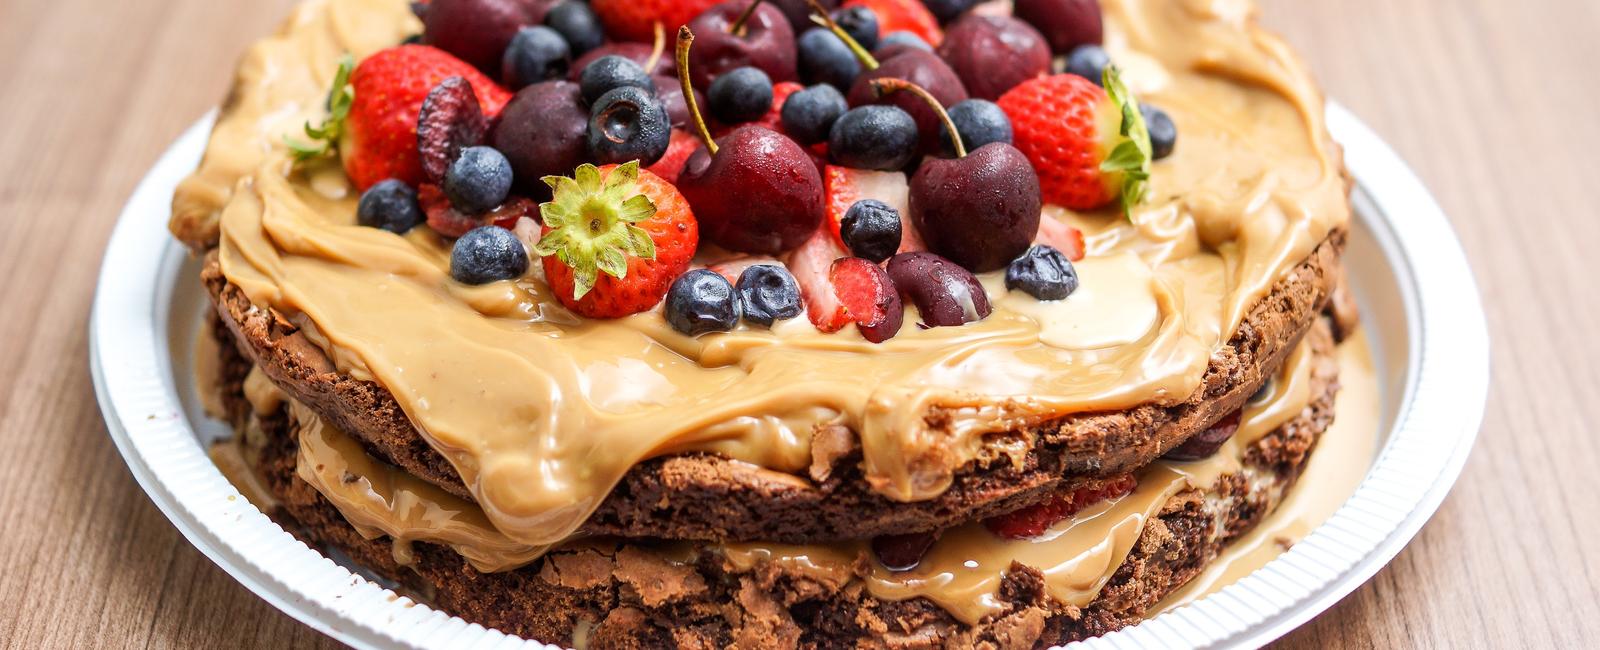 TRY THIS 9 Mesmerizing Cake Recipes